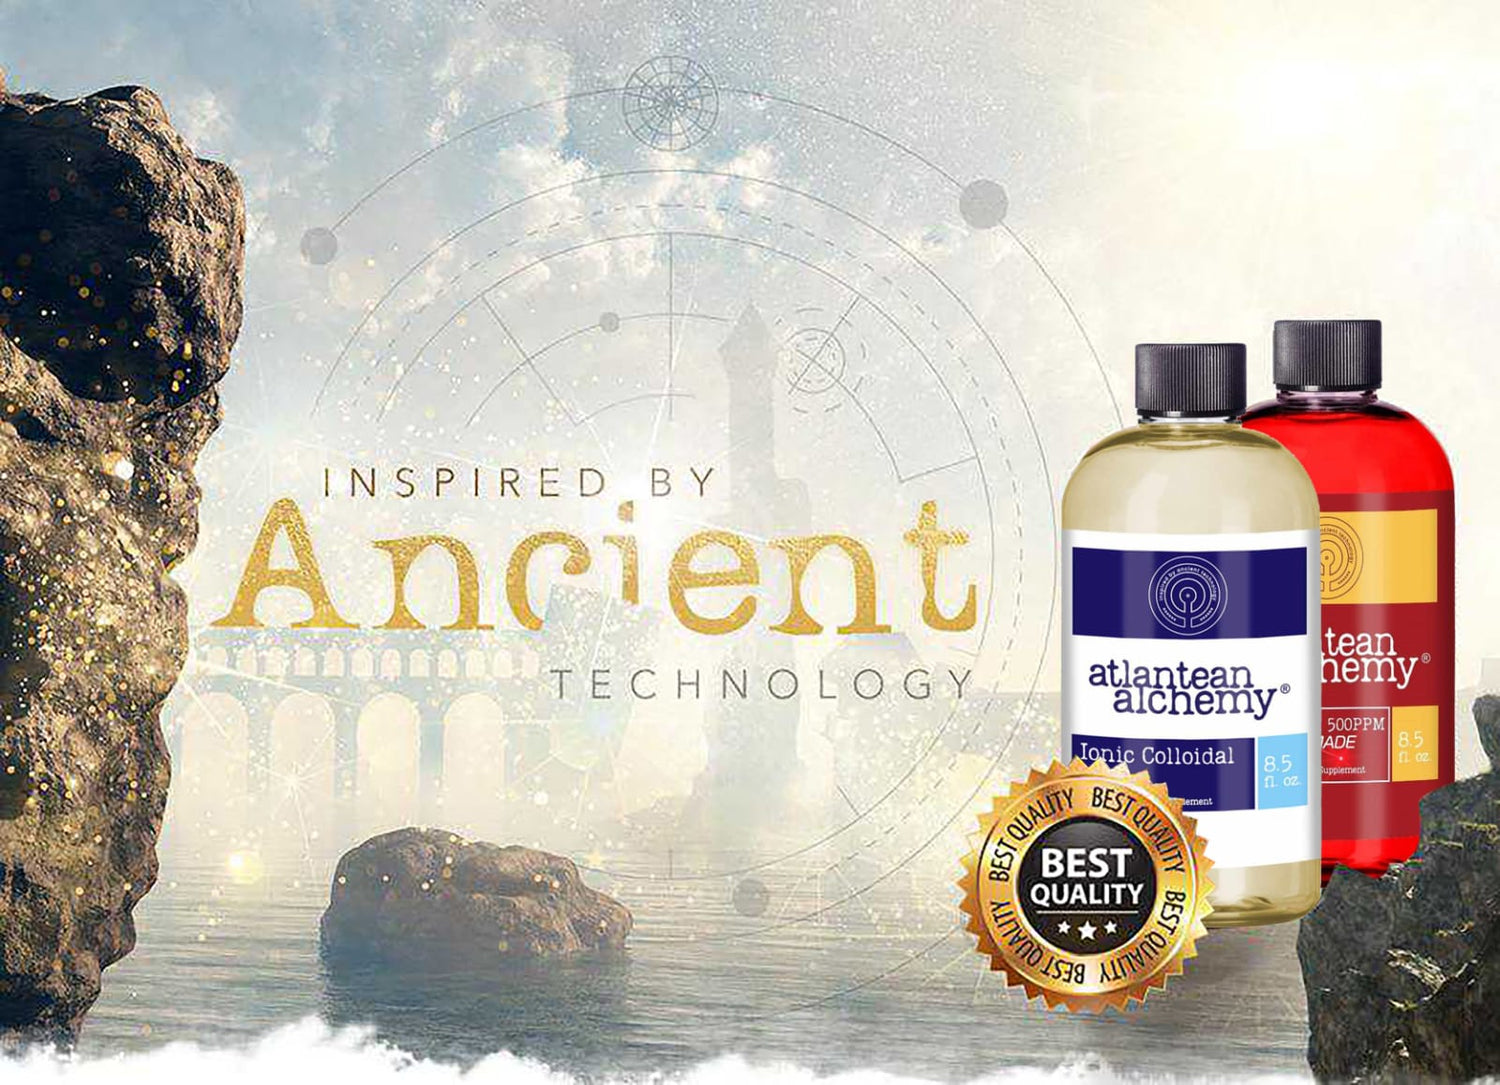 atlantean alchemy home page